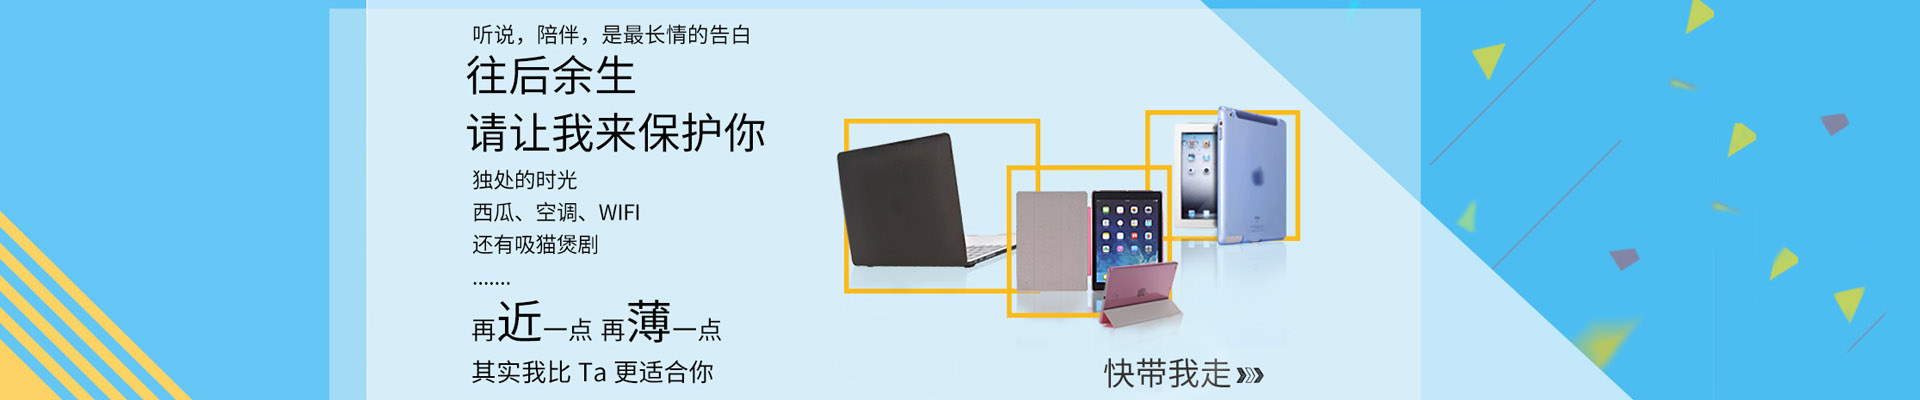 iPadmini2全包tpu保护壳-tpu款-东莞市成康电子有限公司